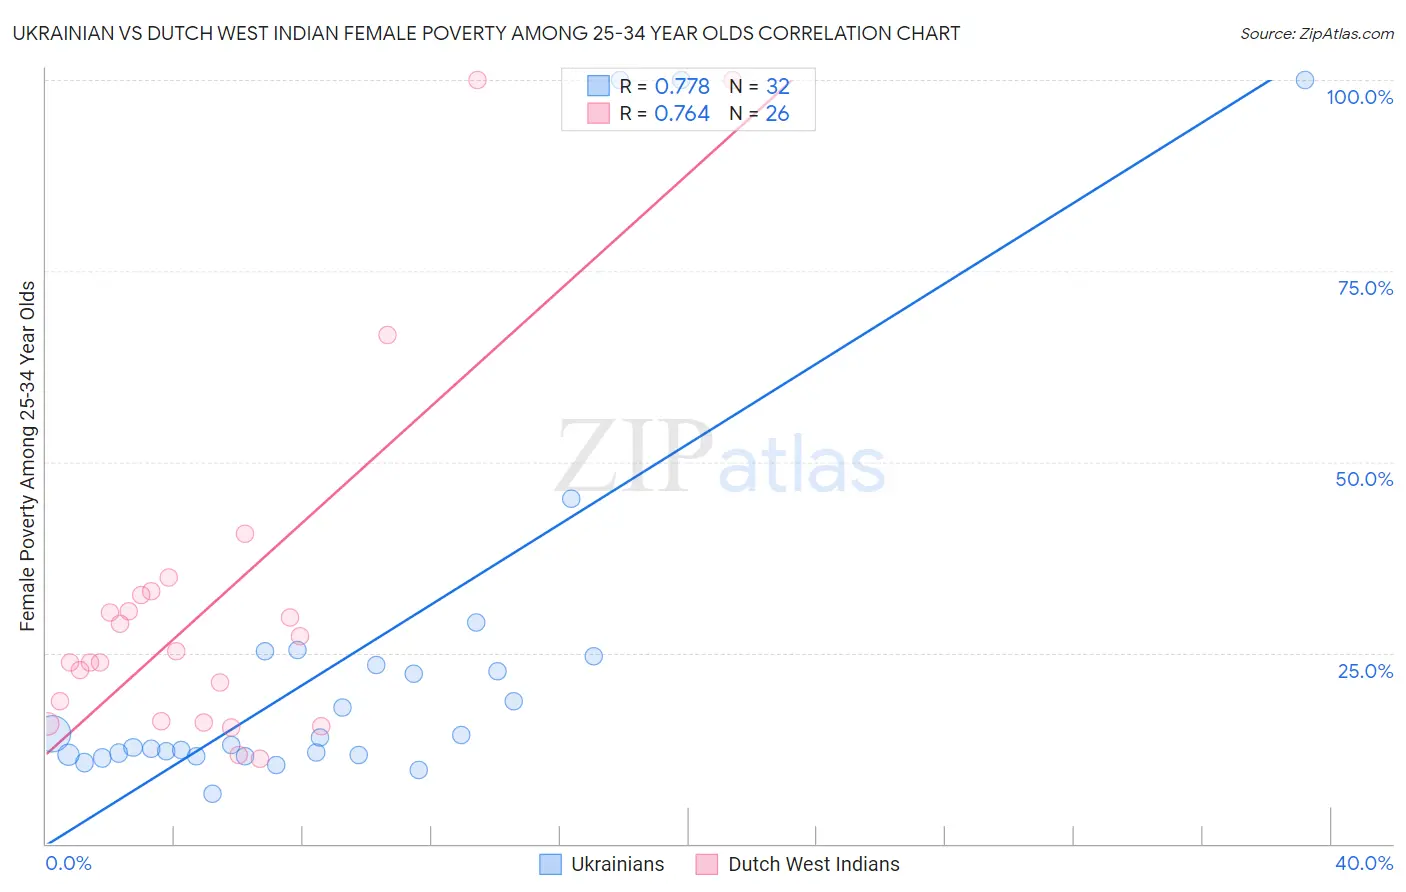 Ukrainian vs Dutch West Indian Female Poverty Among 25-34 Year Olds